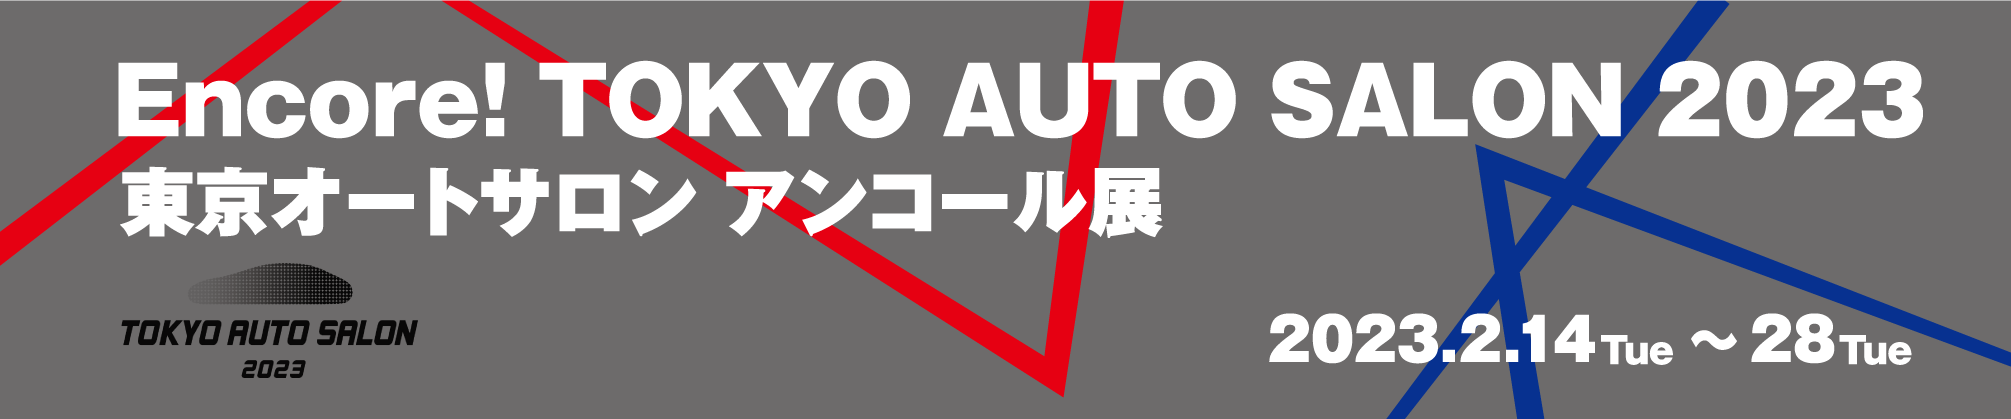 Encore！ TOKYO AUTO SALON 2023 東京オートサロン アンコール展